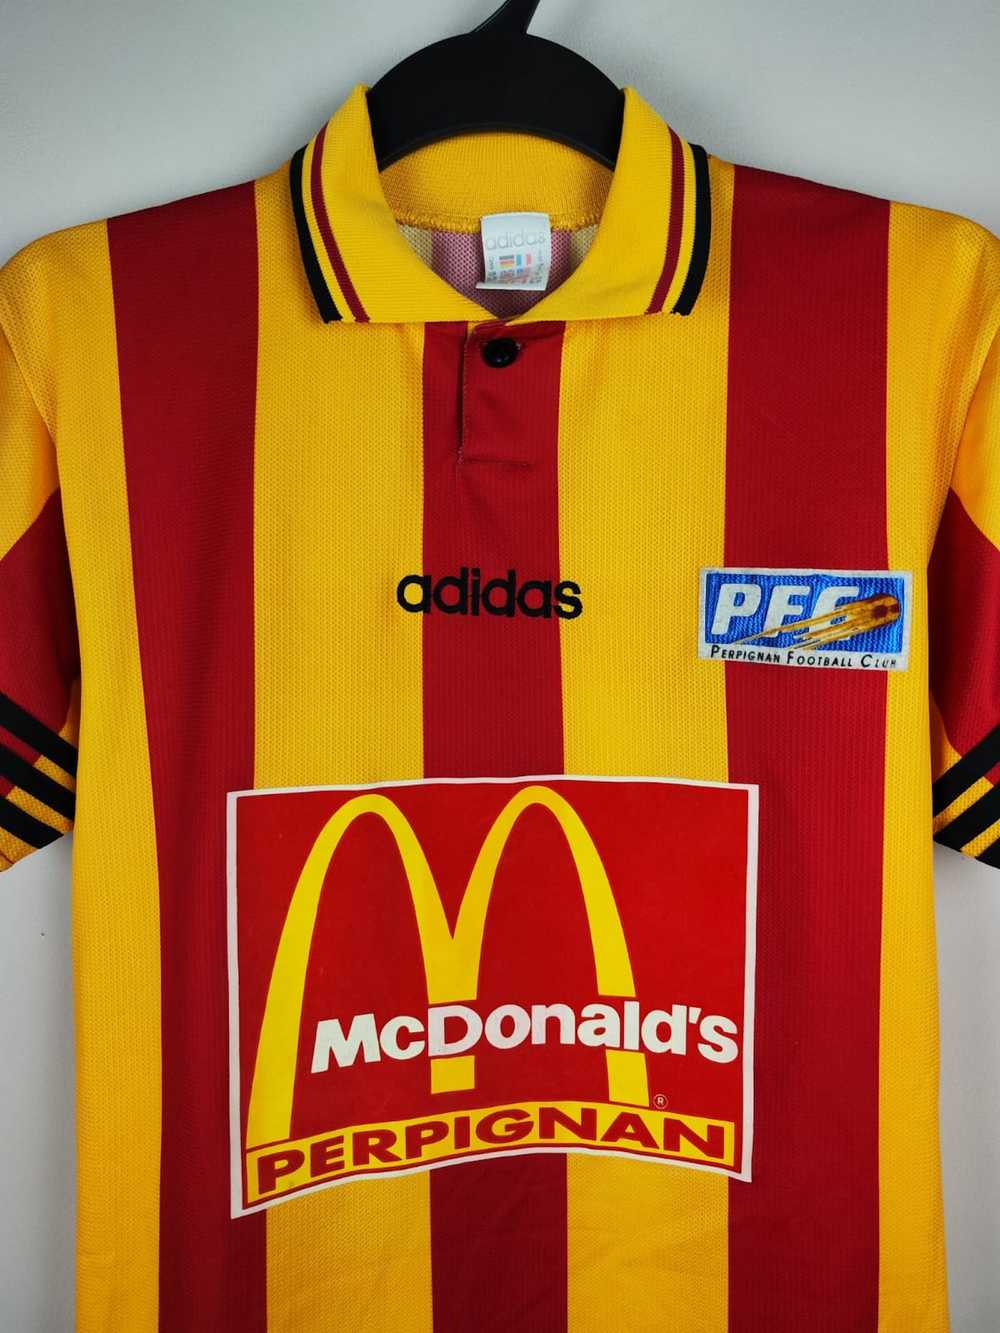 Adidas Perpignan FC 1996/97 Adidas Home Shirt McD… - image 2